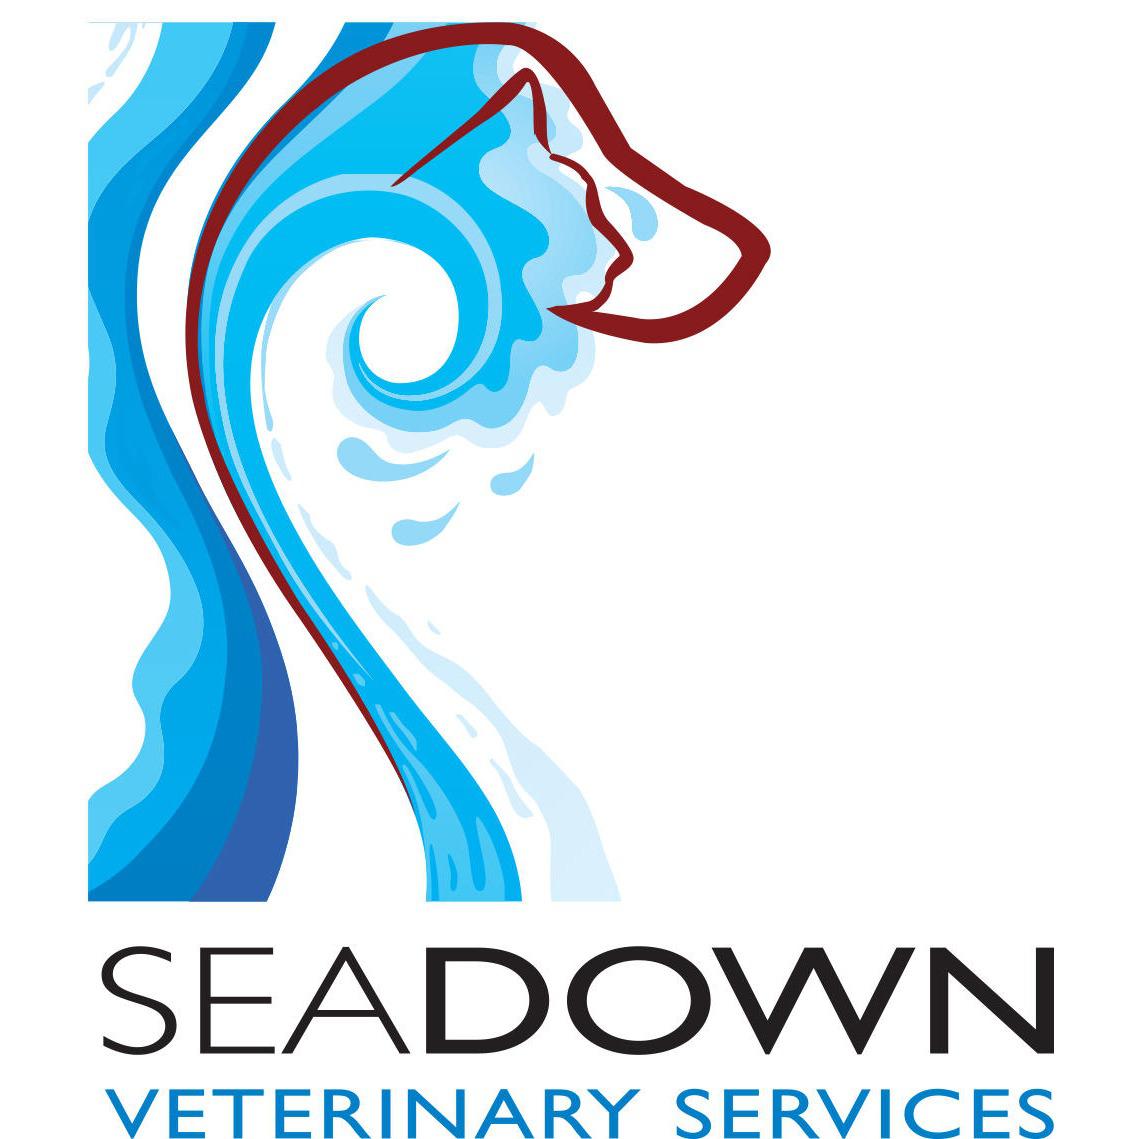 Seadown Veterinary Services - Totton Surgery - Southampton, Hampshire SO40 3JA - 02380 663817 | ShowMeLocal.com